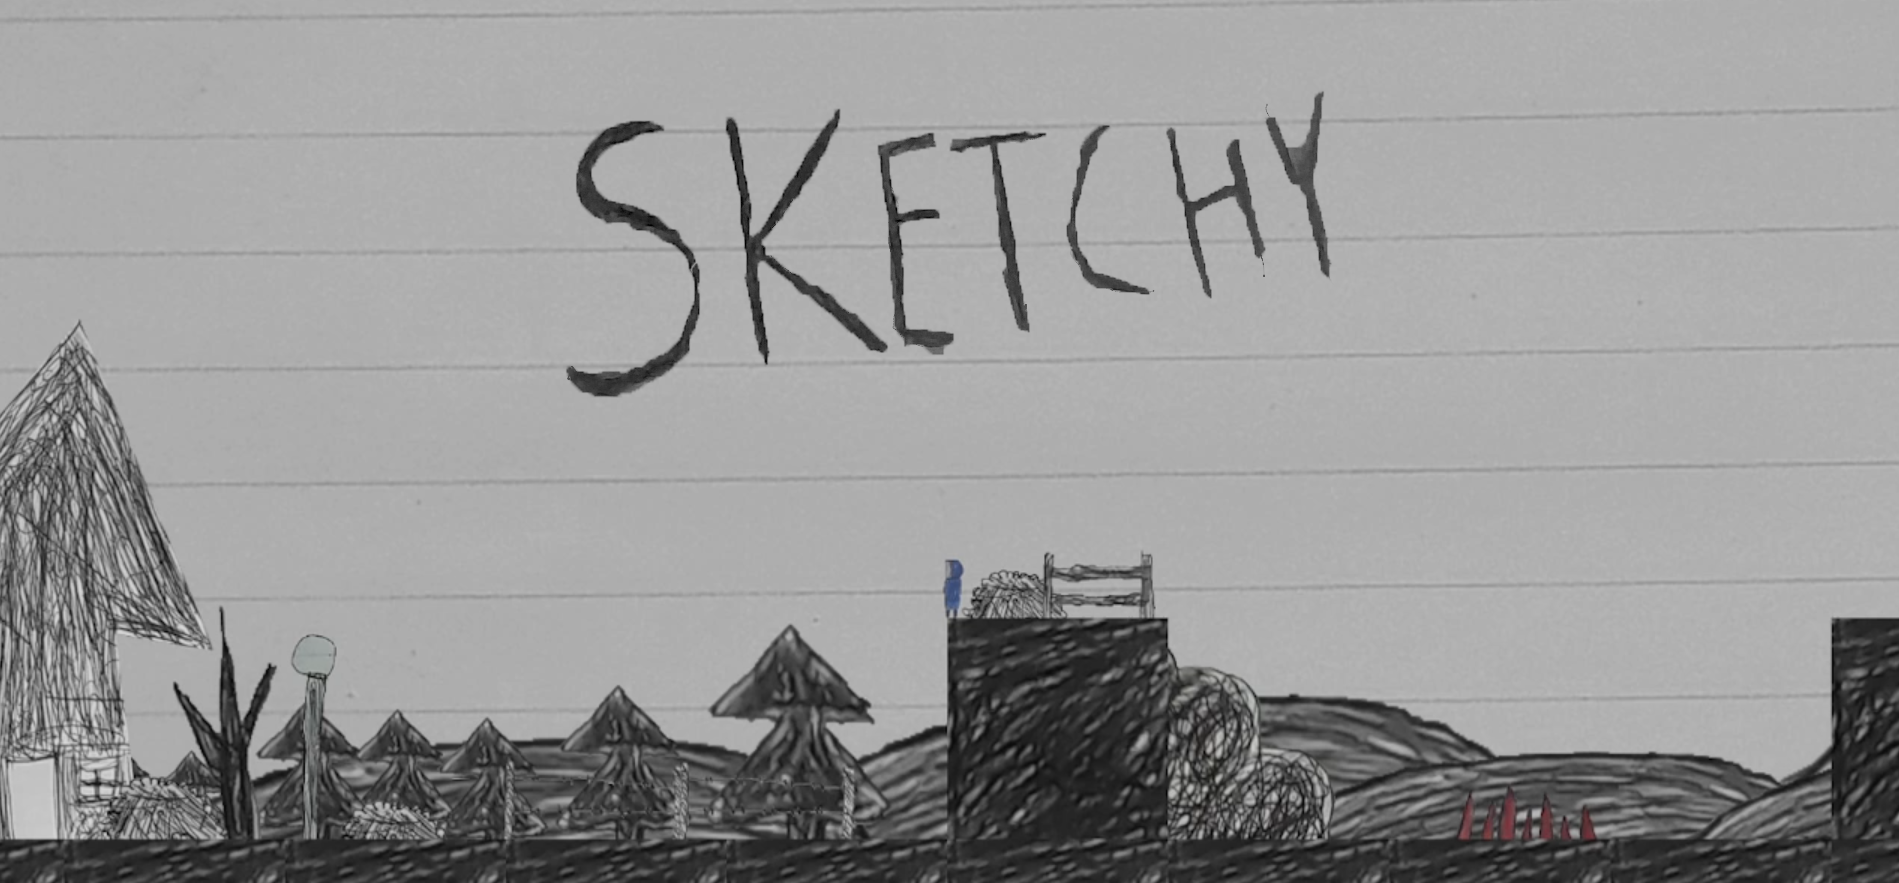 Sketchy